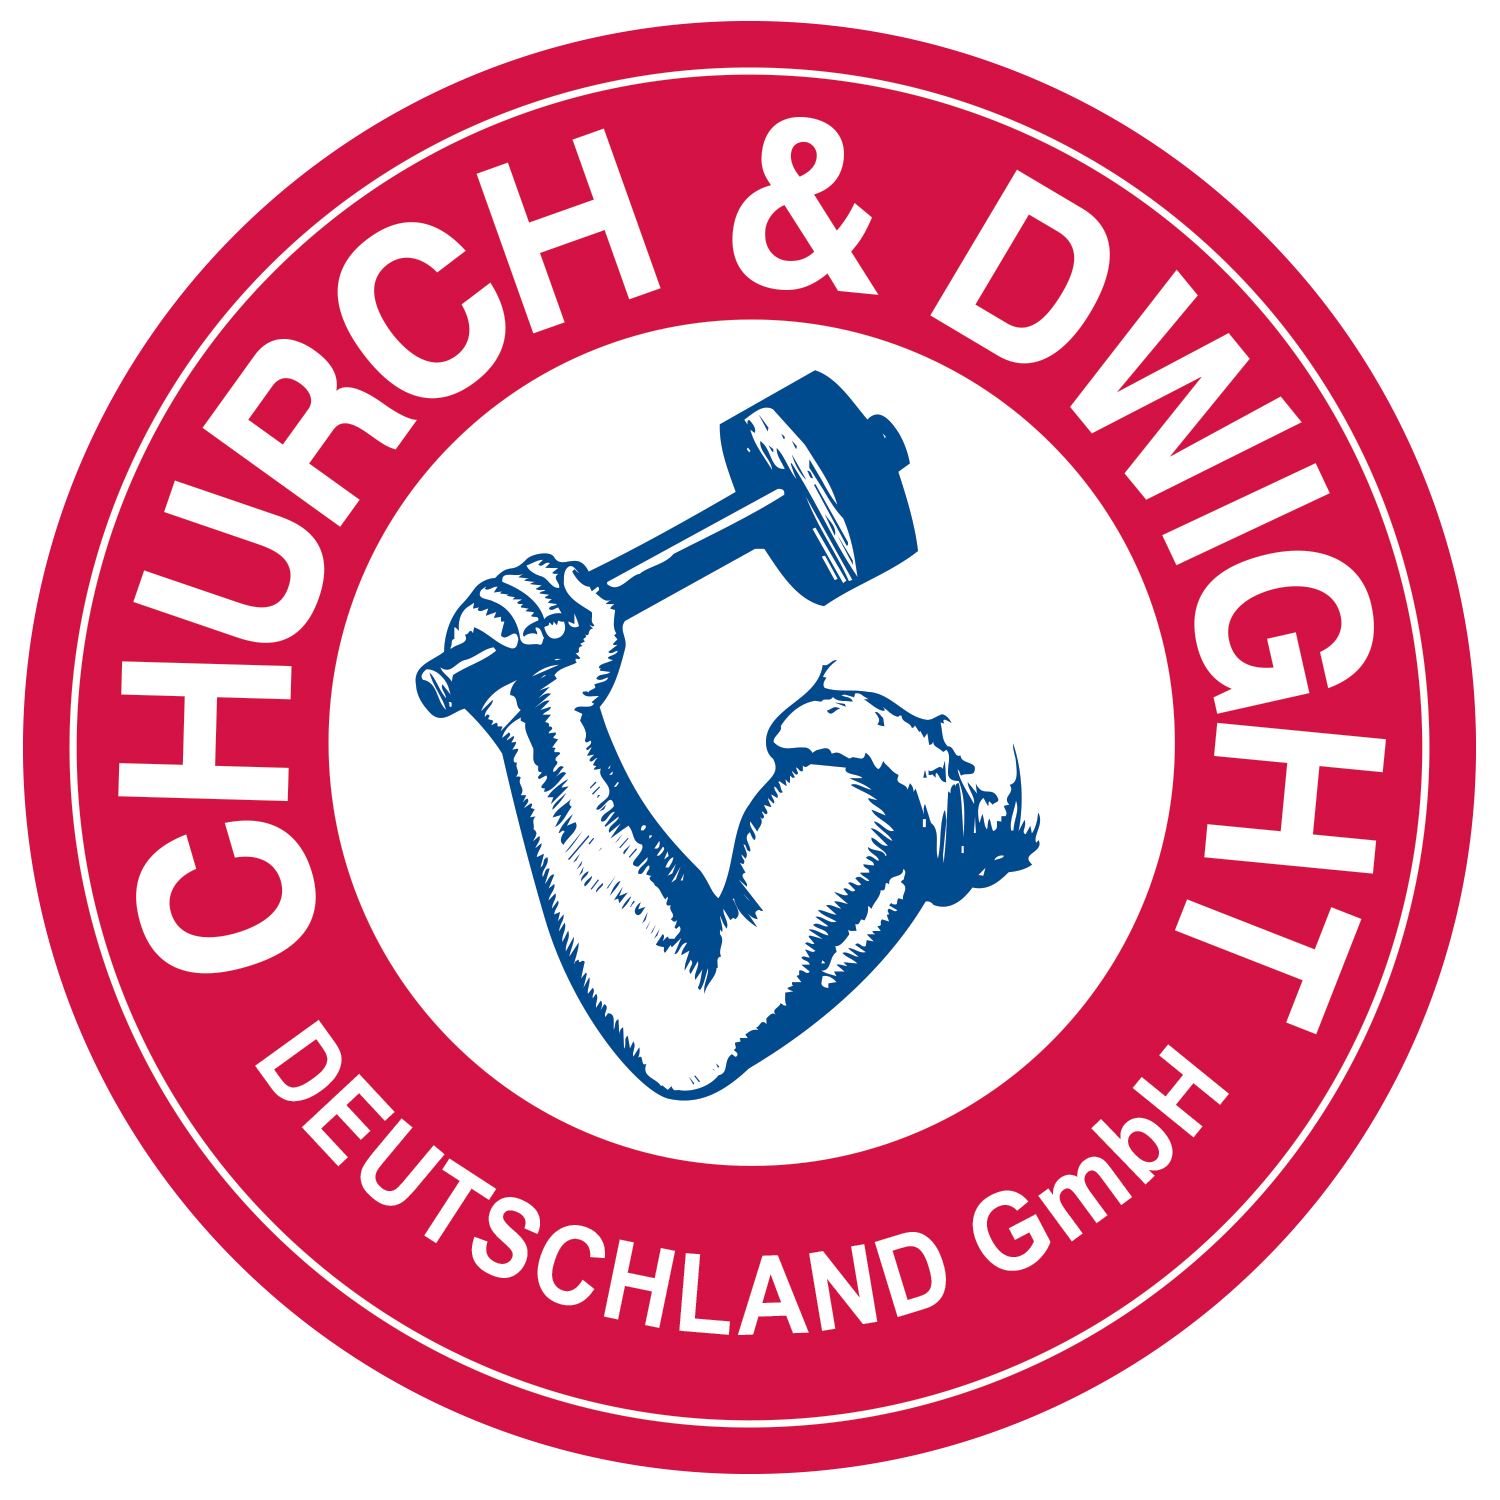 Church & Dwight Co., Inc.